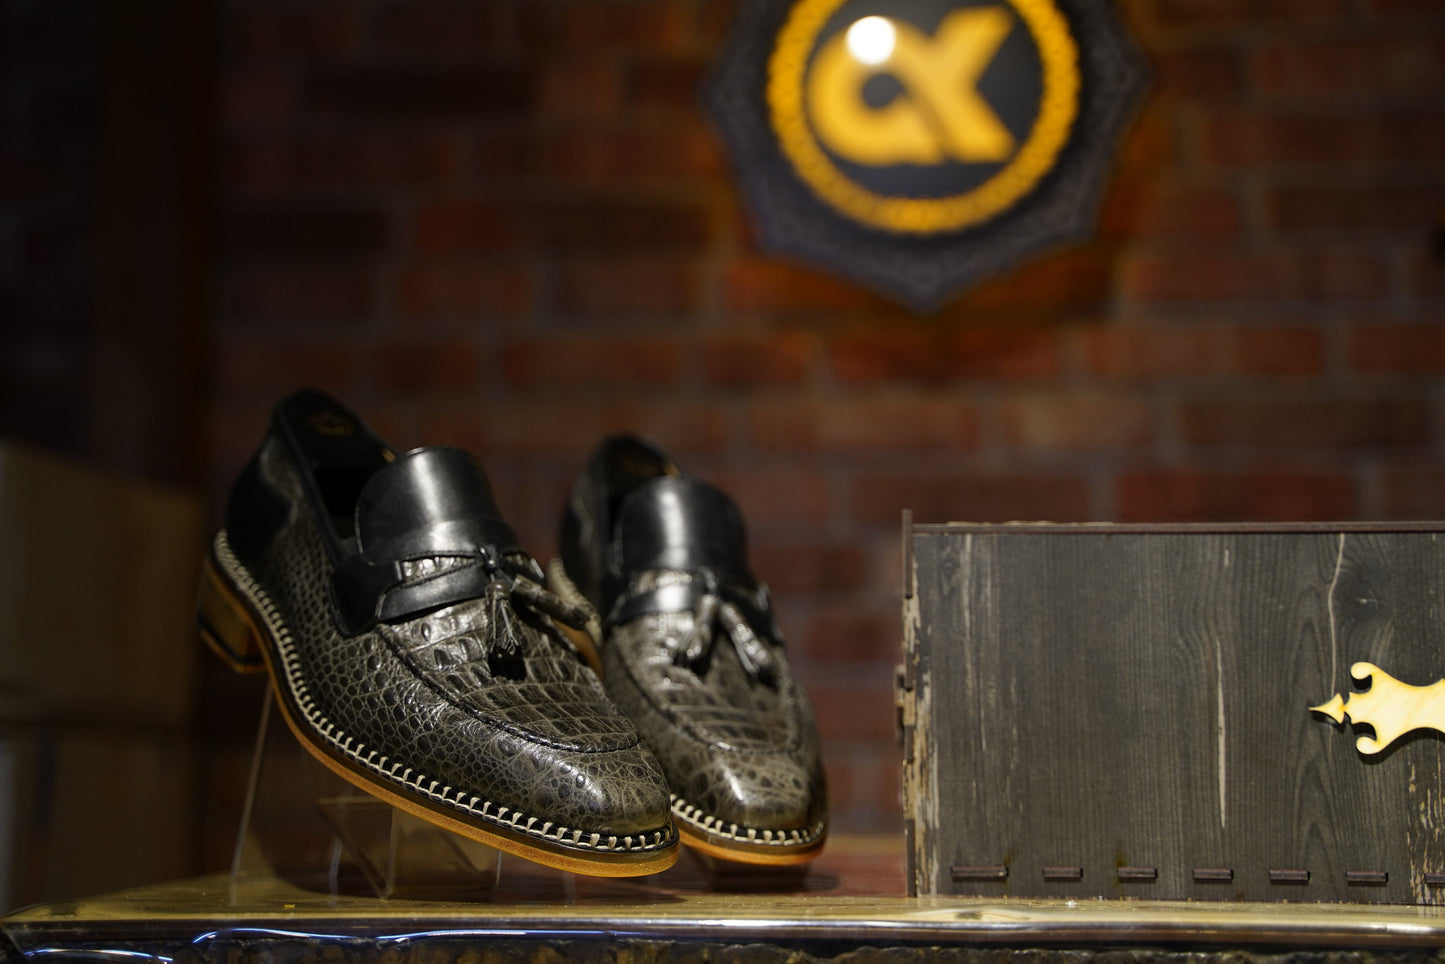 Alligator Peny Leather Loafer For Men Handmade Custom Loafer Slip On For Men With Named Box And Text Best Gift For Him Christmas Gift